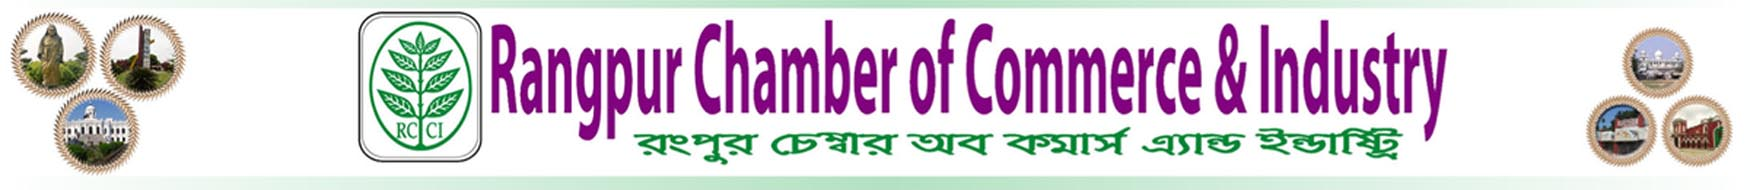 Rangpur Chamber Of Commerce & Industry